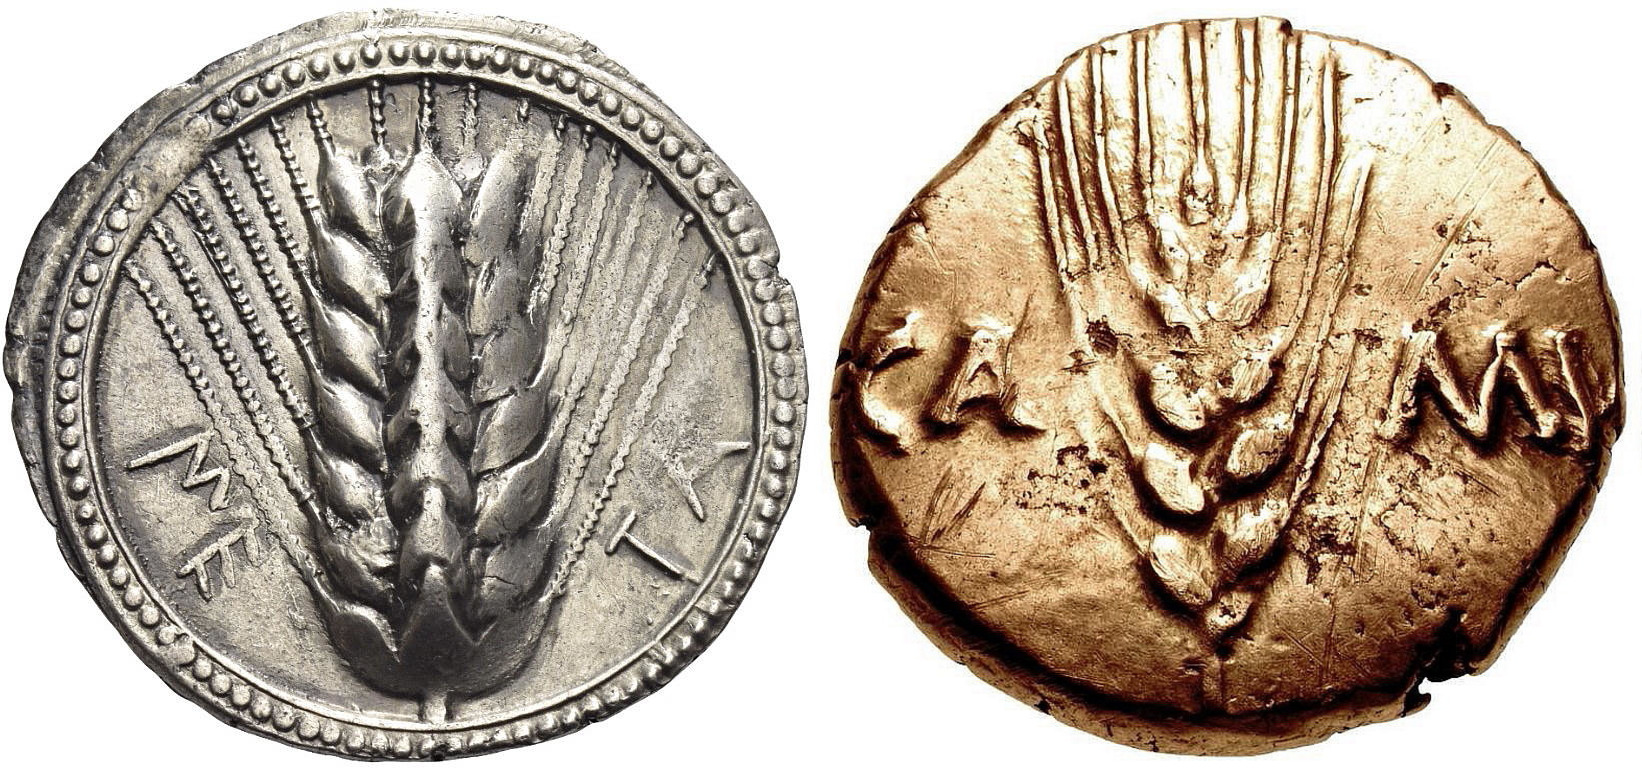 Greek & Celtic coin comparison 1.jpg